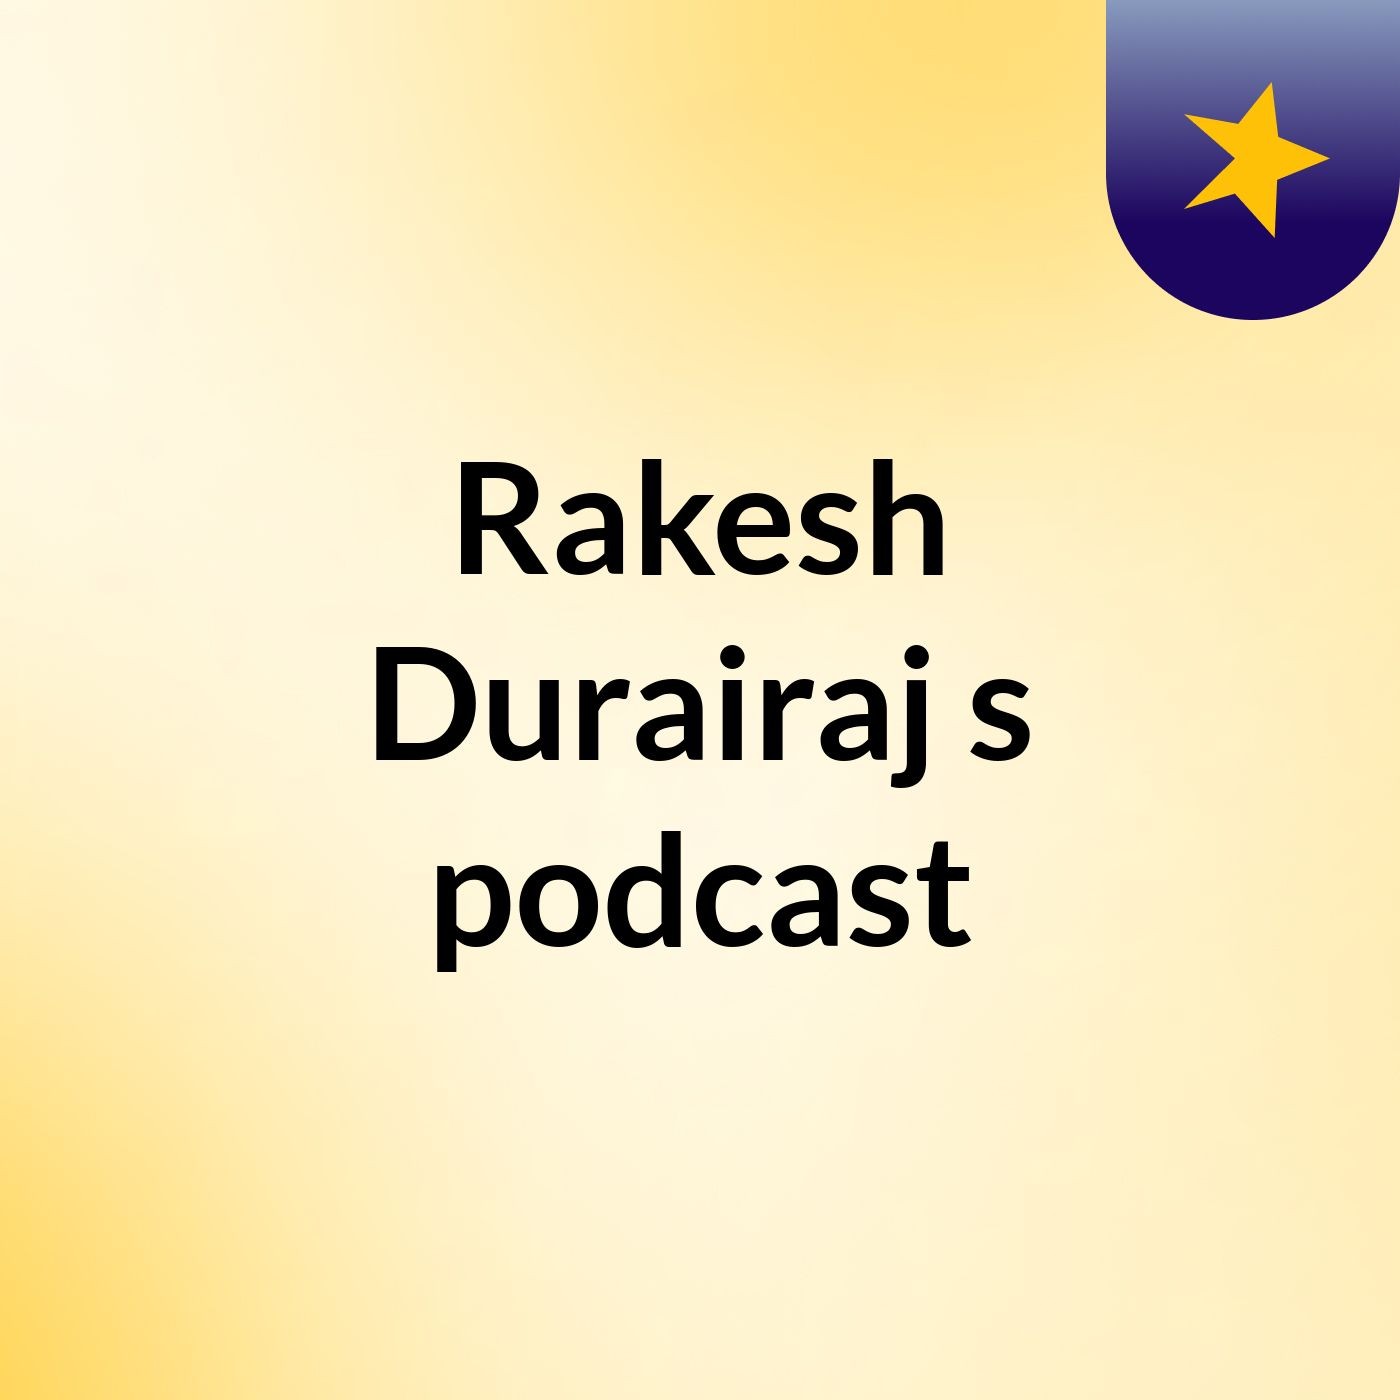 Rakesh Durairaj's podcast